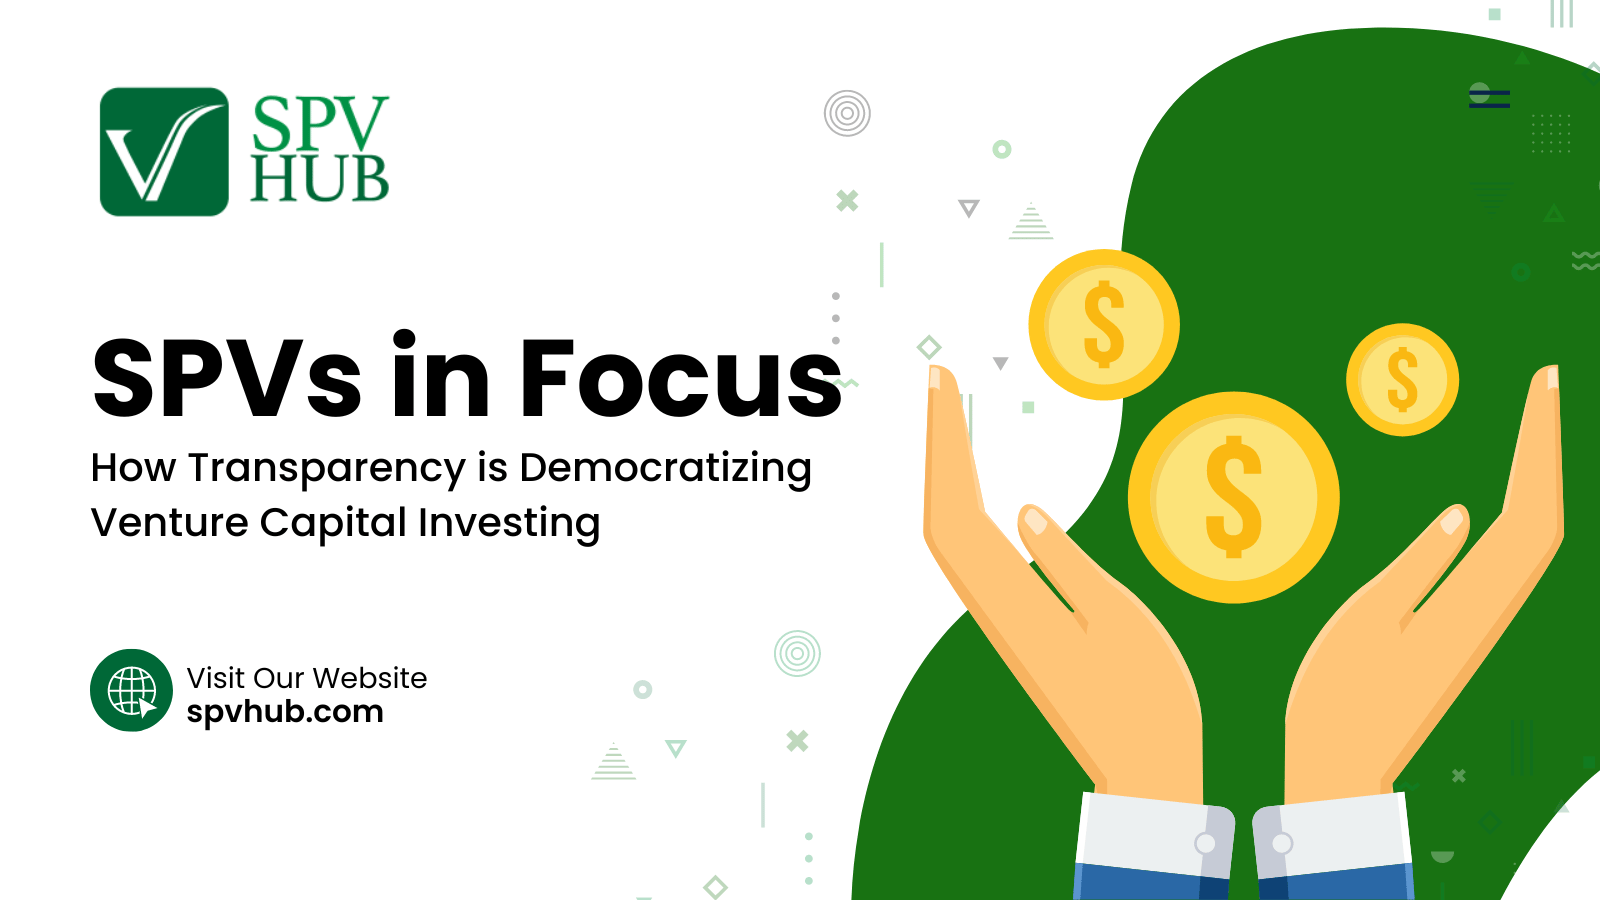 SPVs in Focus: How Transparency is Democratizing Venture Capital Investing